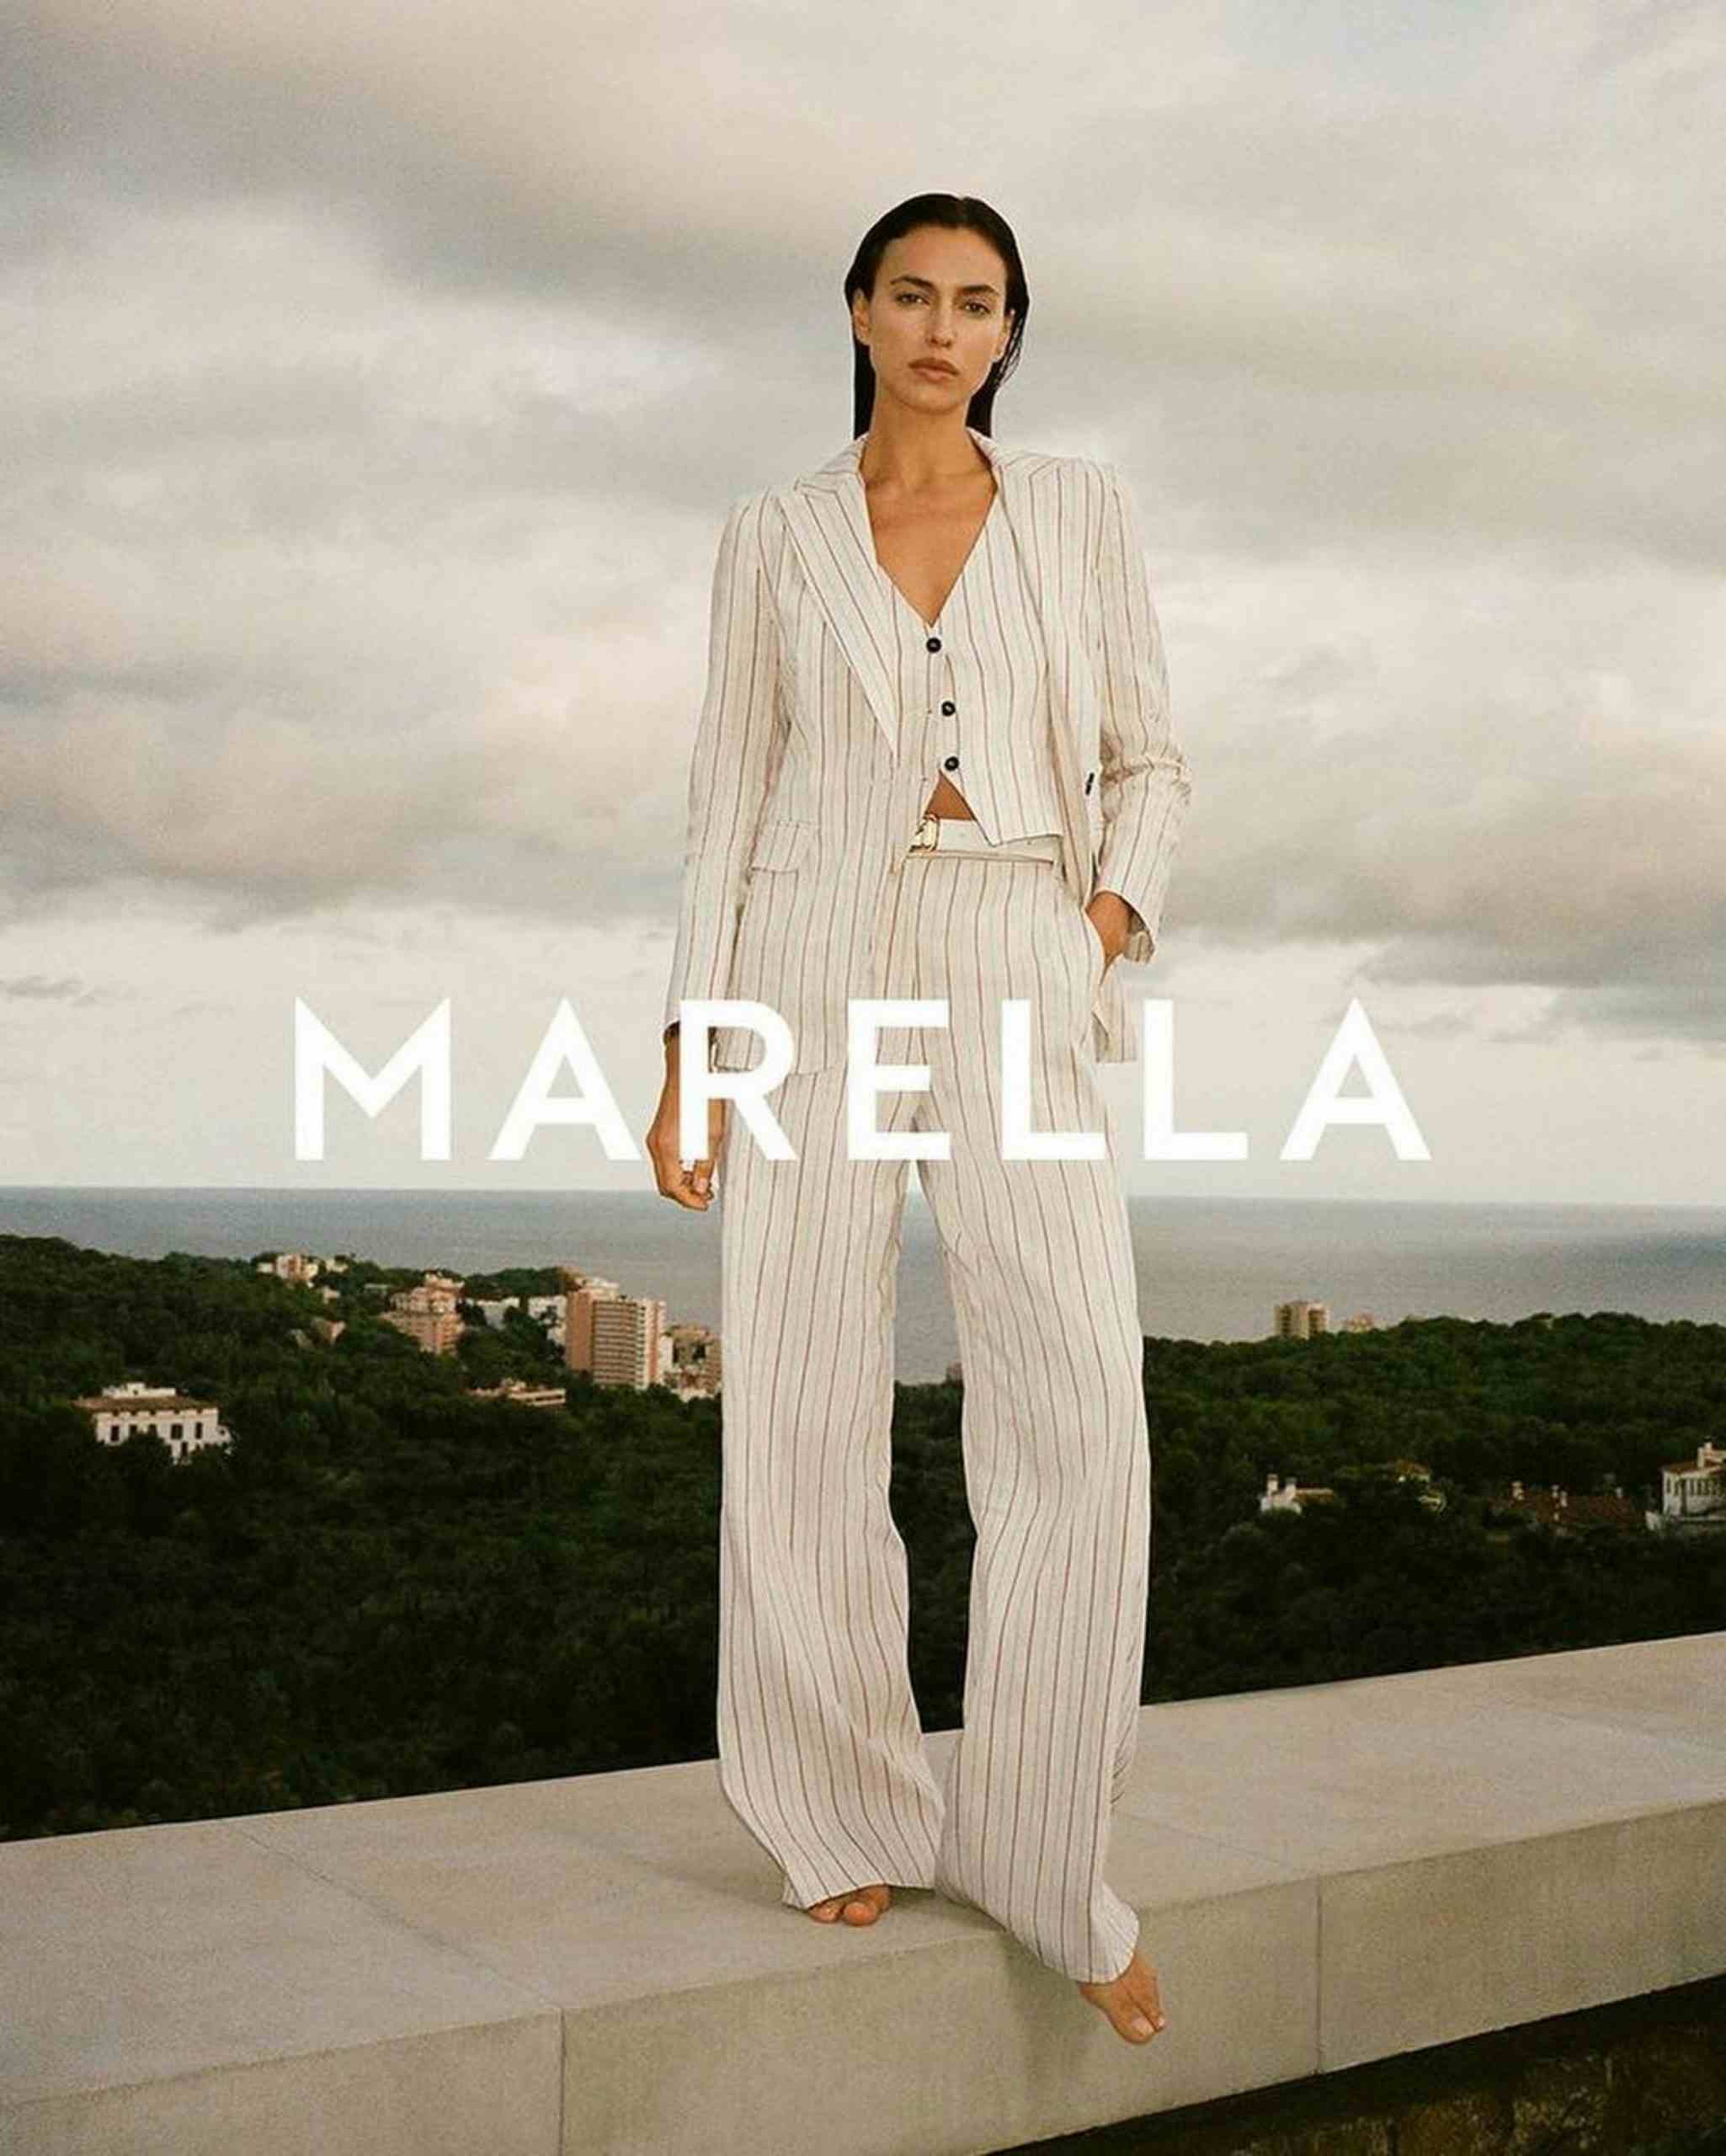 MARELLA -  SS '23
Photographer: Pierre-Ange Carlotti
Model: Irina Shayk
